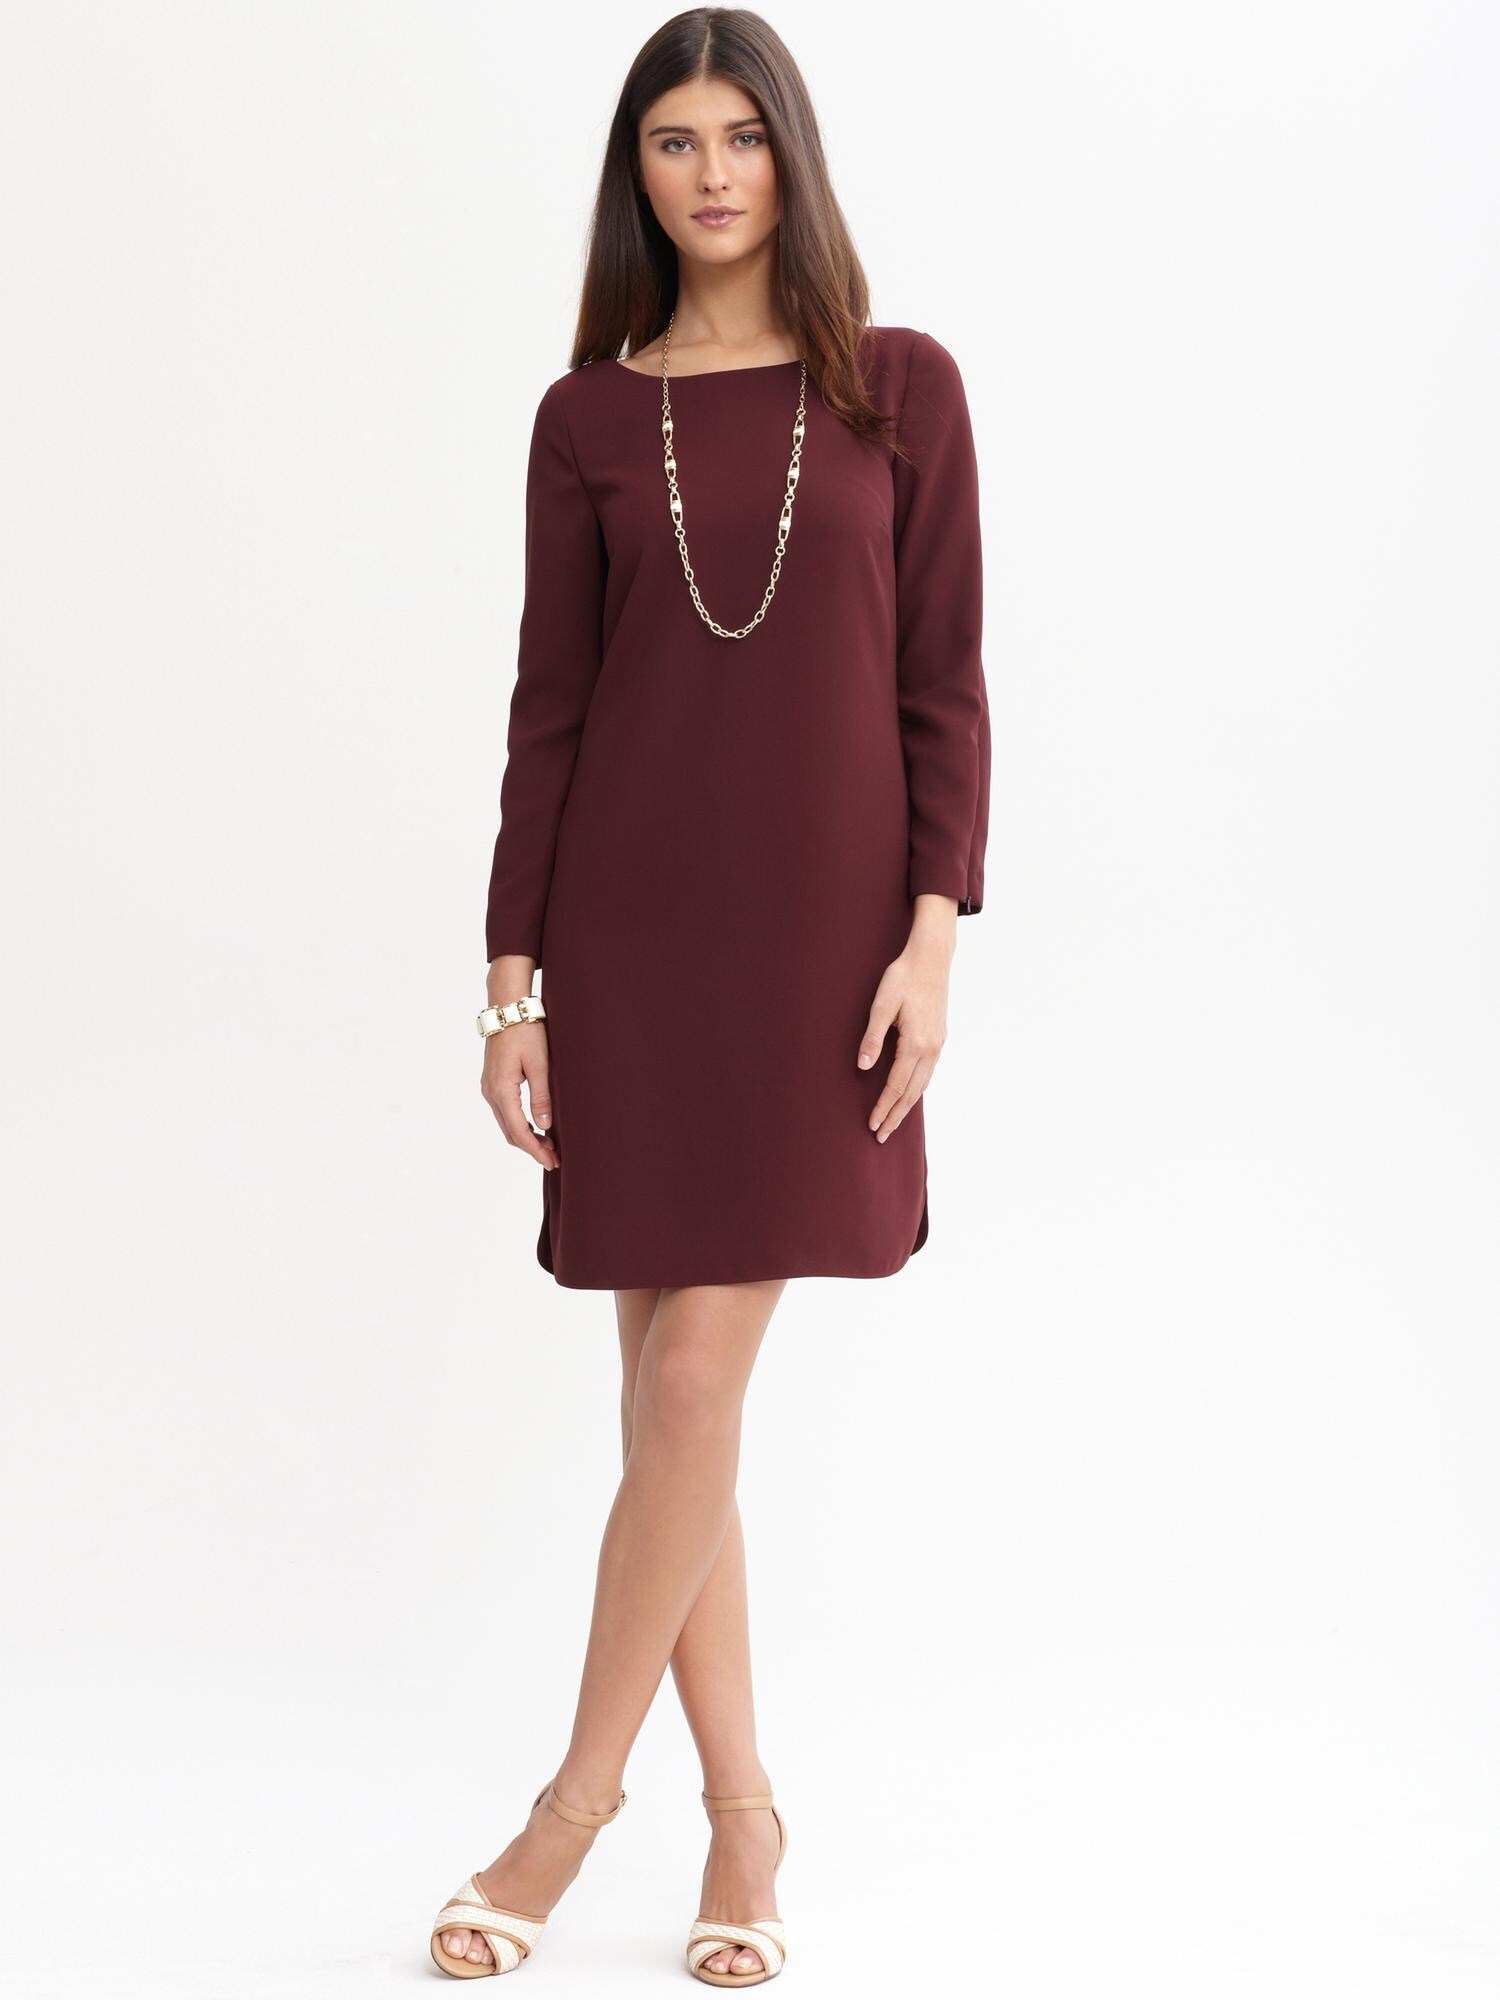 Burgundy crepe dress